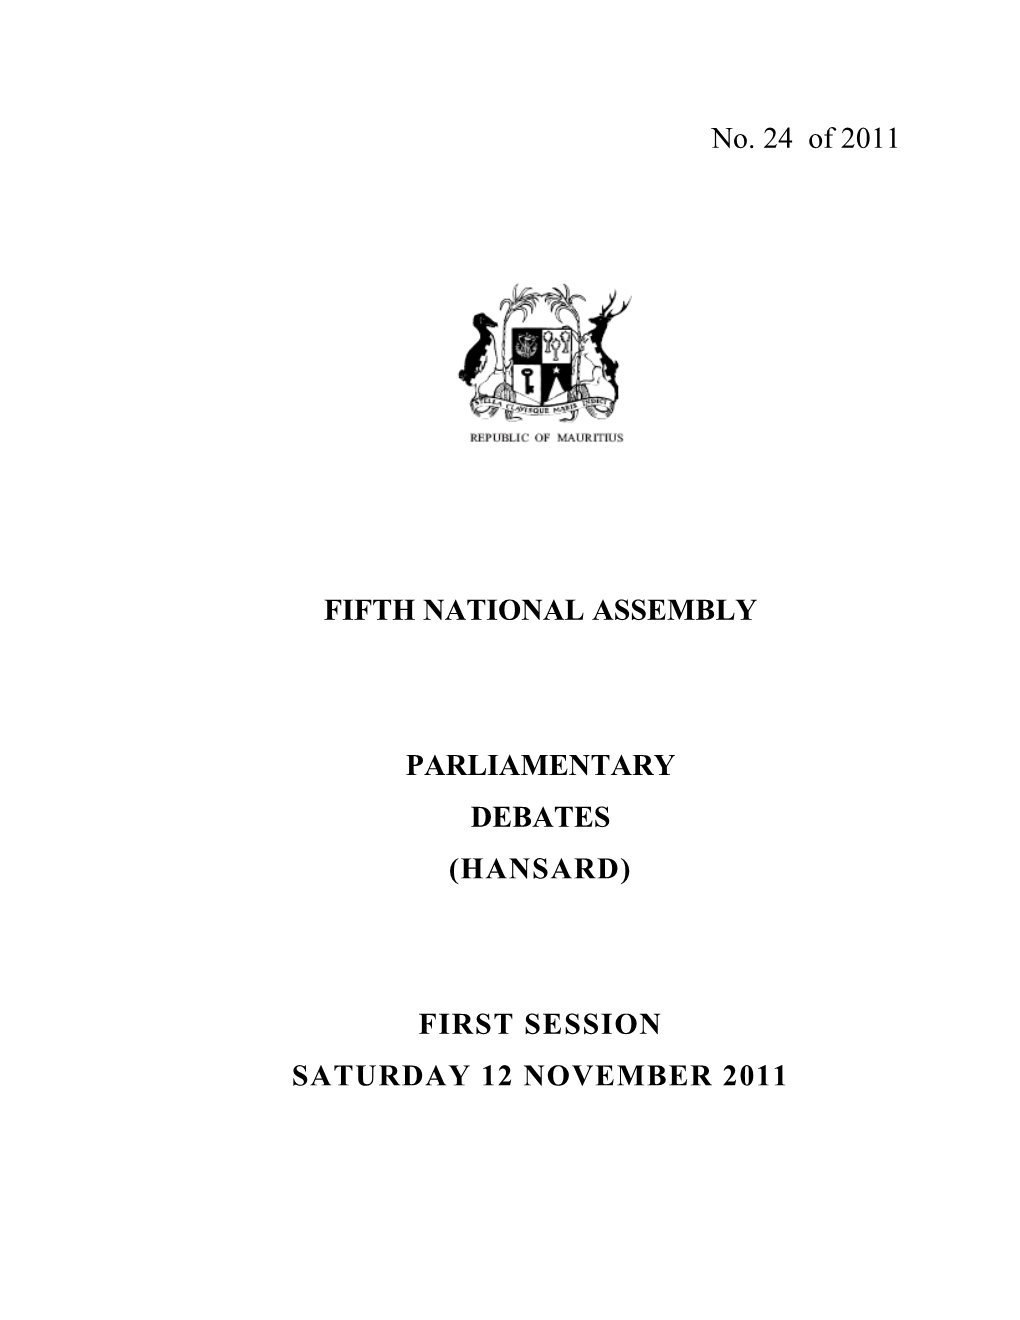 (Hansard) First Session Saturday 12 November 2011